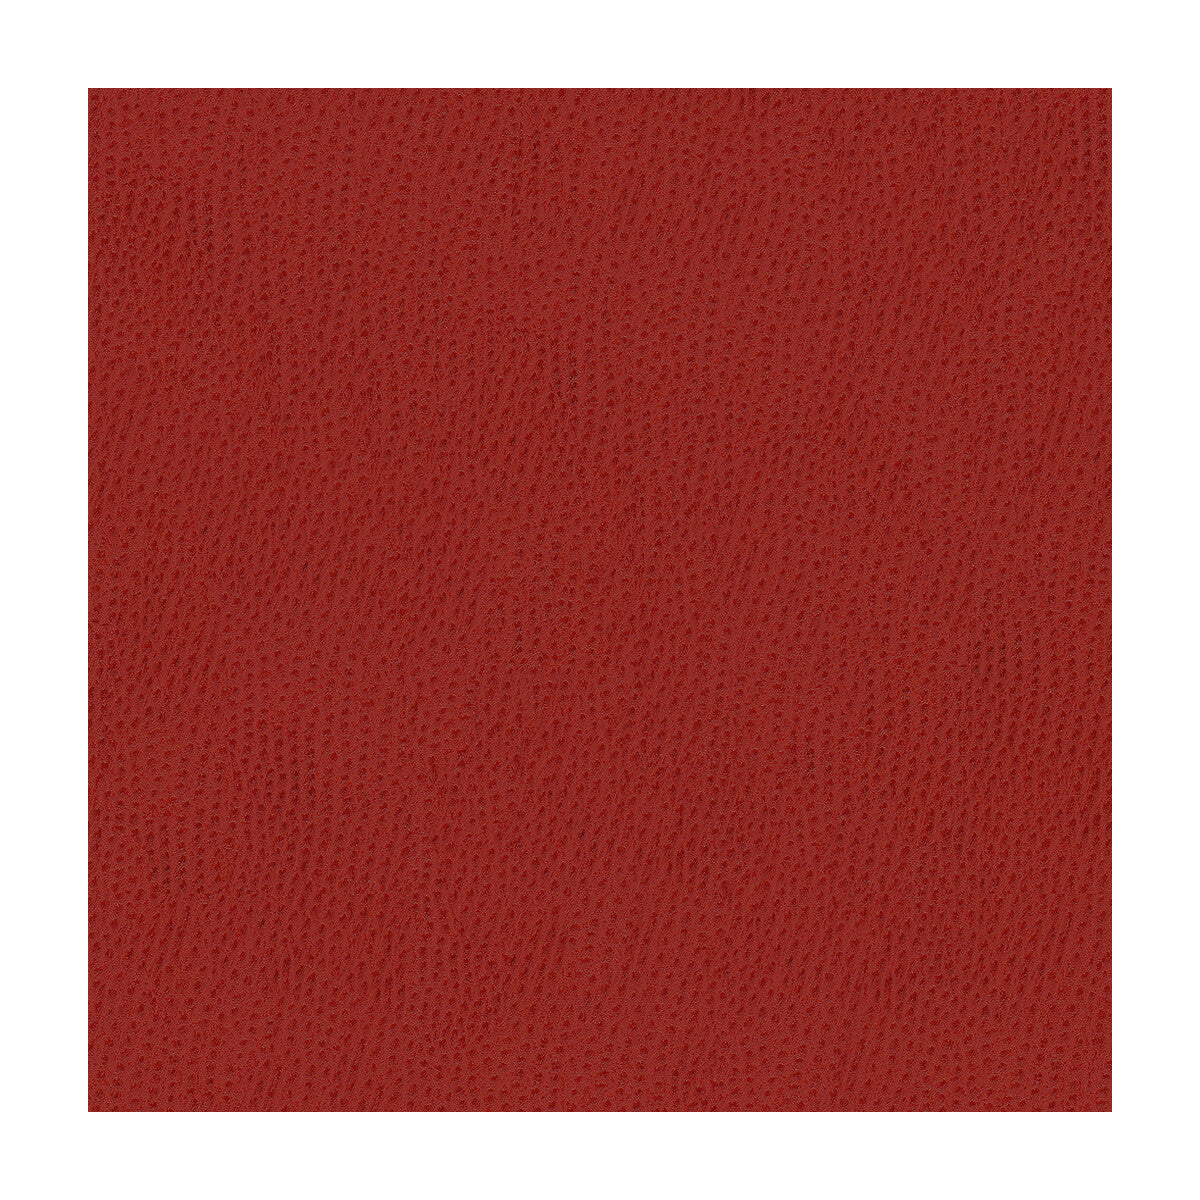 Kravet Contract fabric in belus-19 color - pattern BELUS.19.0 - by Kravet Contract